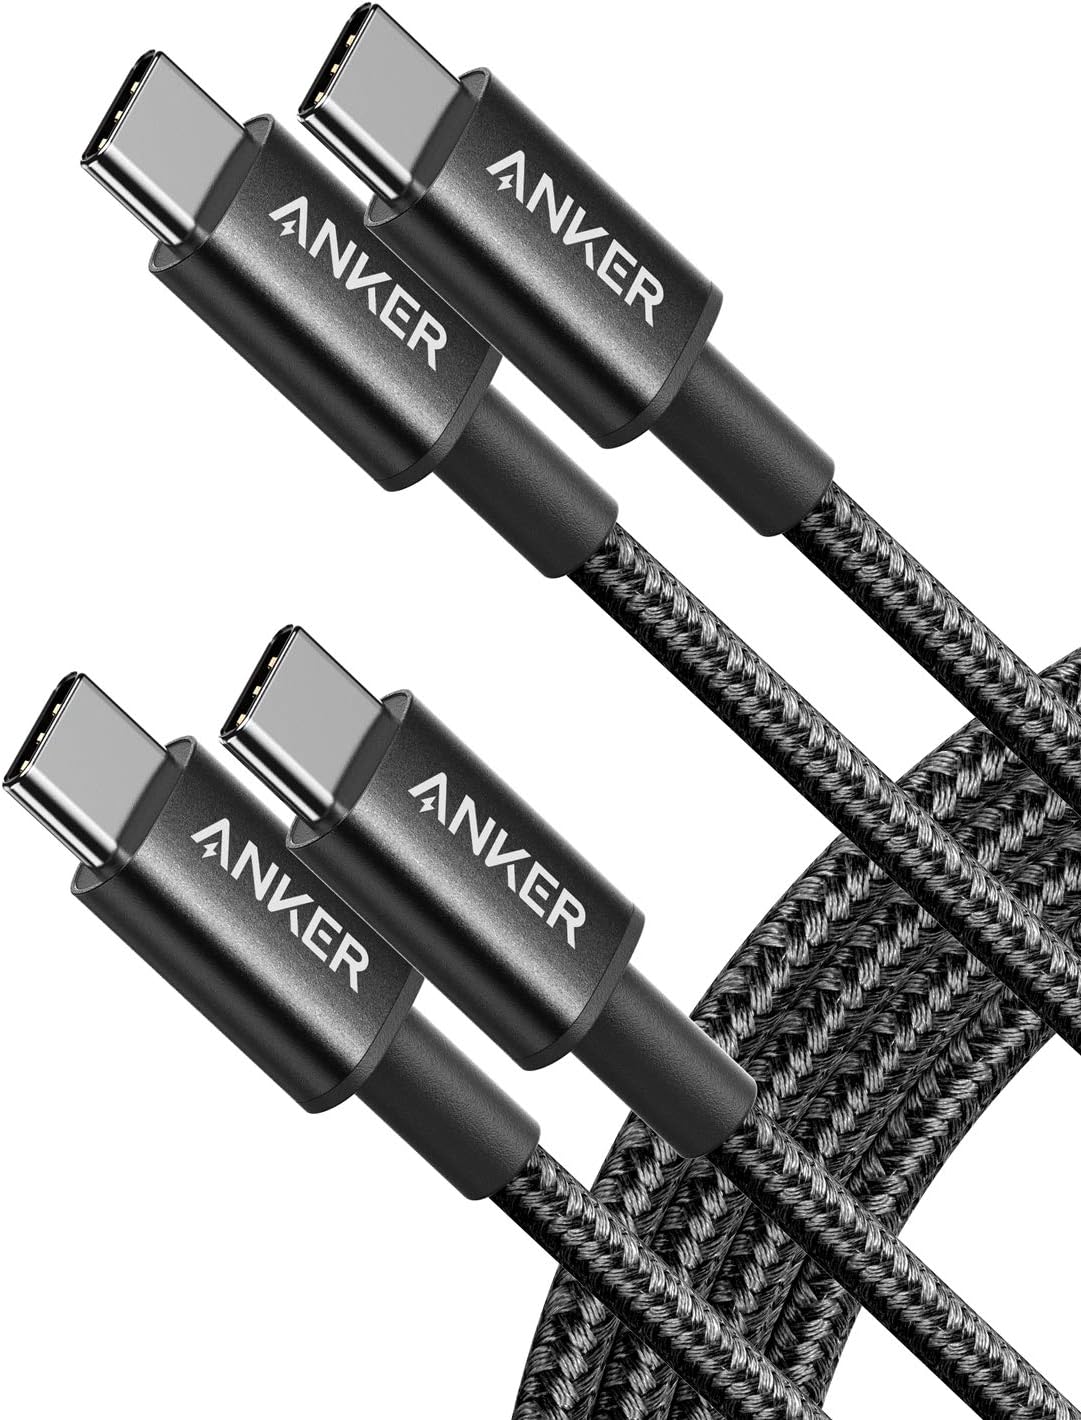 Anker New Nylon Series 3 USB-C to USB-C 2-pack